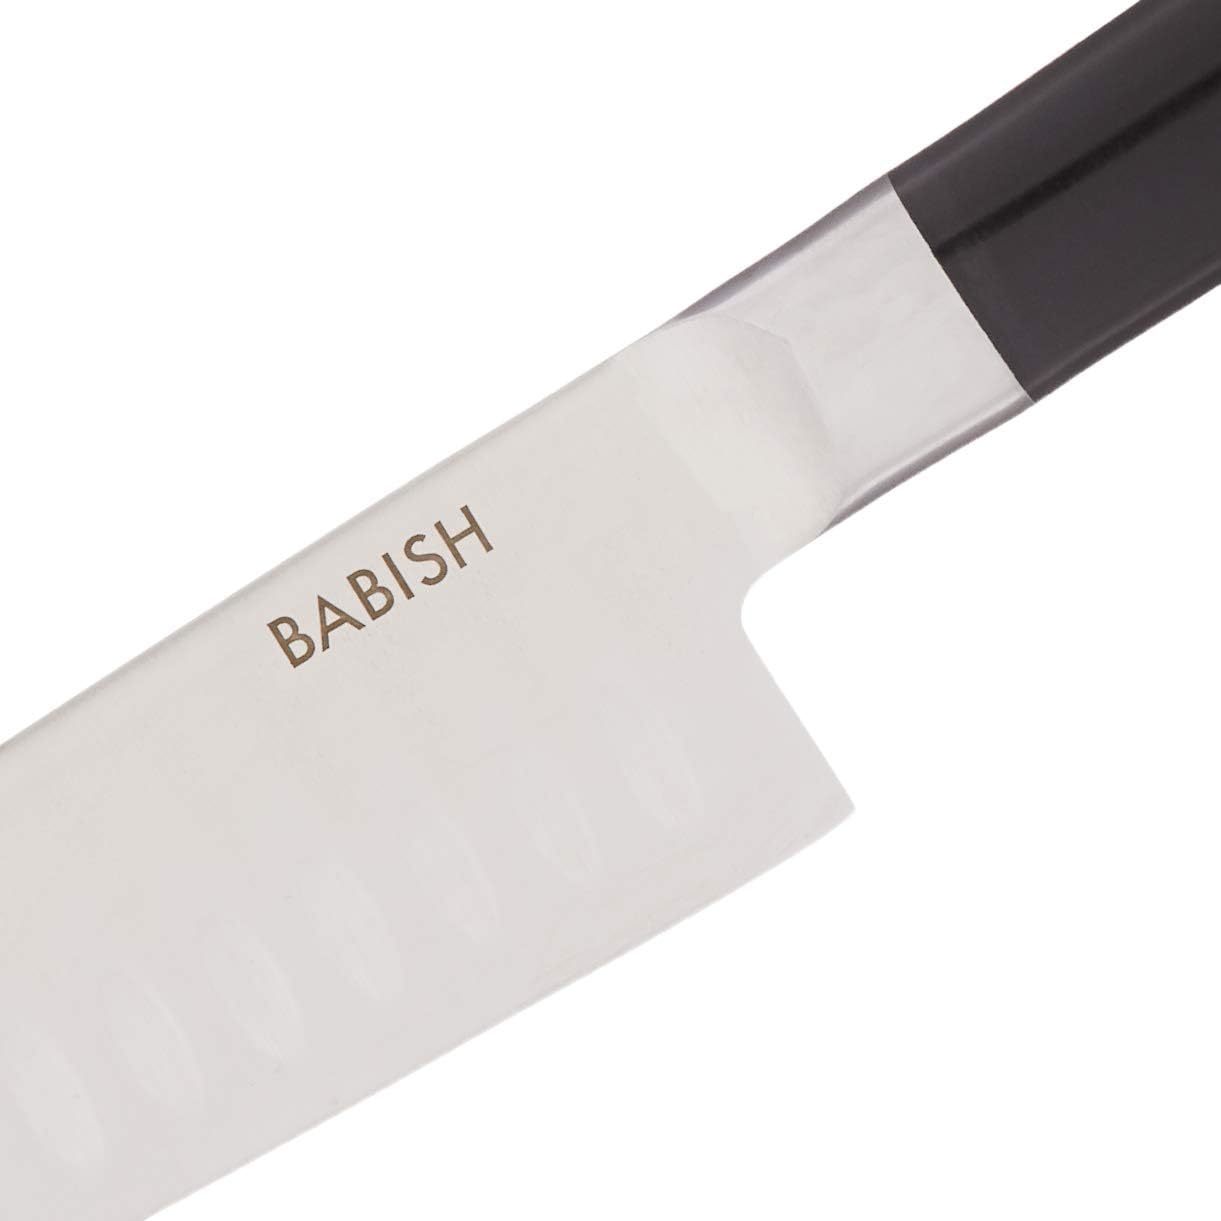 Babish 8'' Hollow Edge Bread Knife